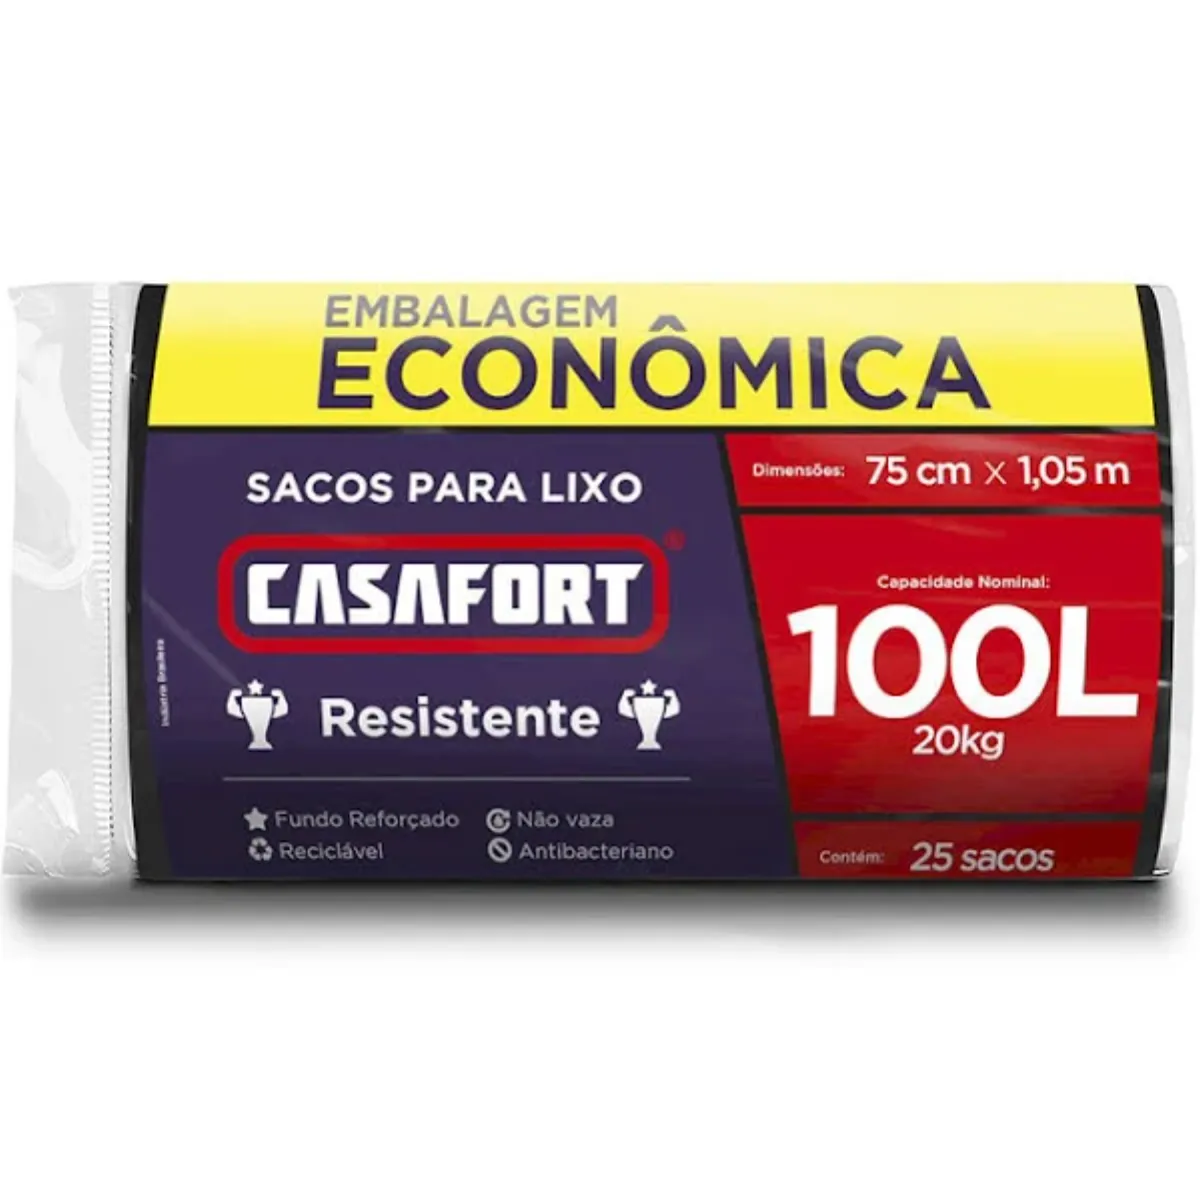 Saco para Lixo Casafort 100L 25 Unidades Embalagem Econômica image number 0